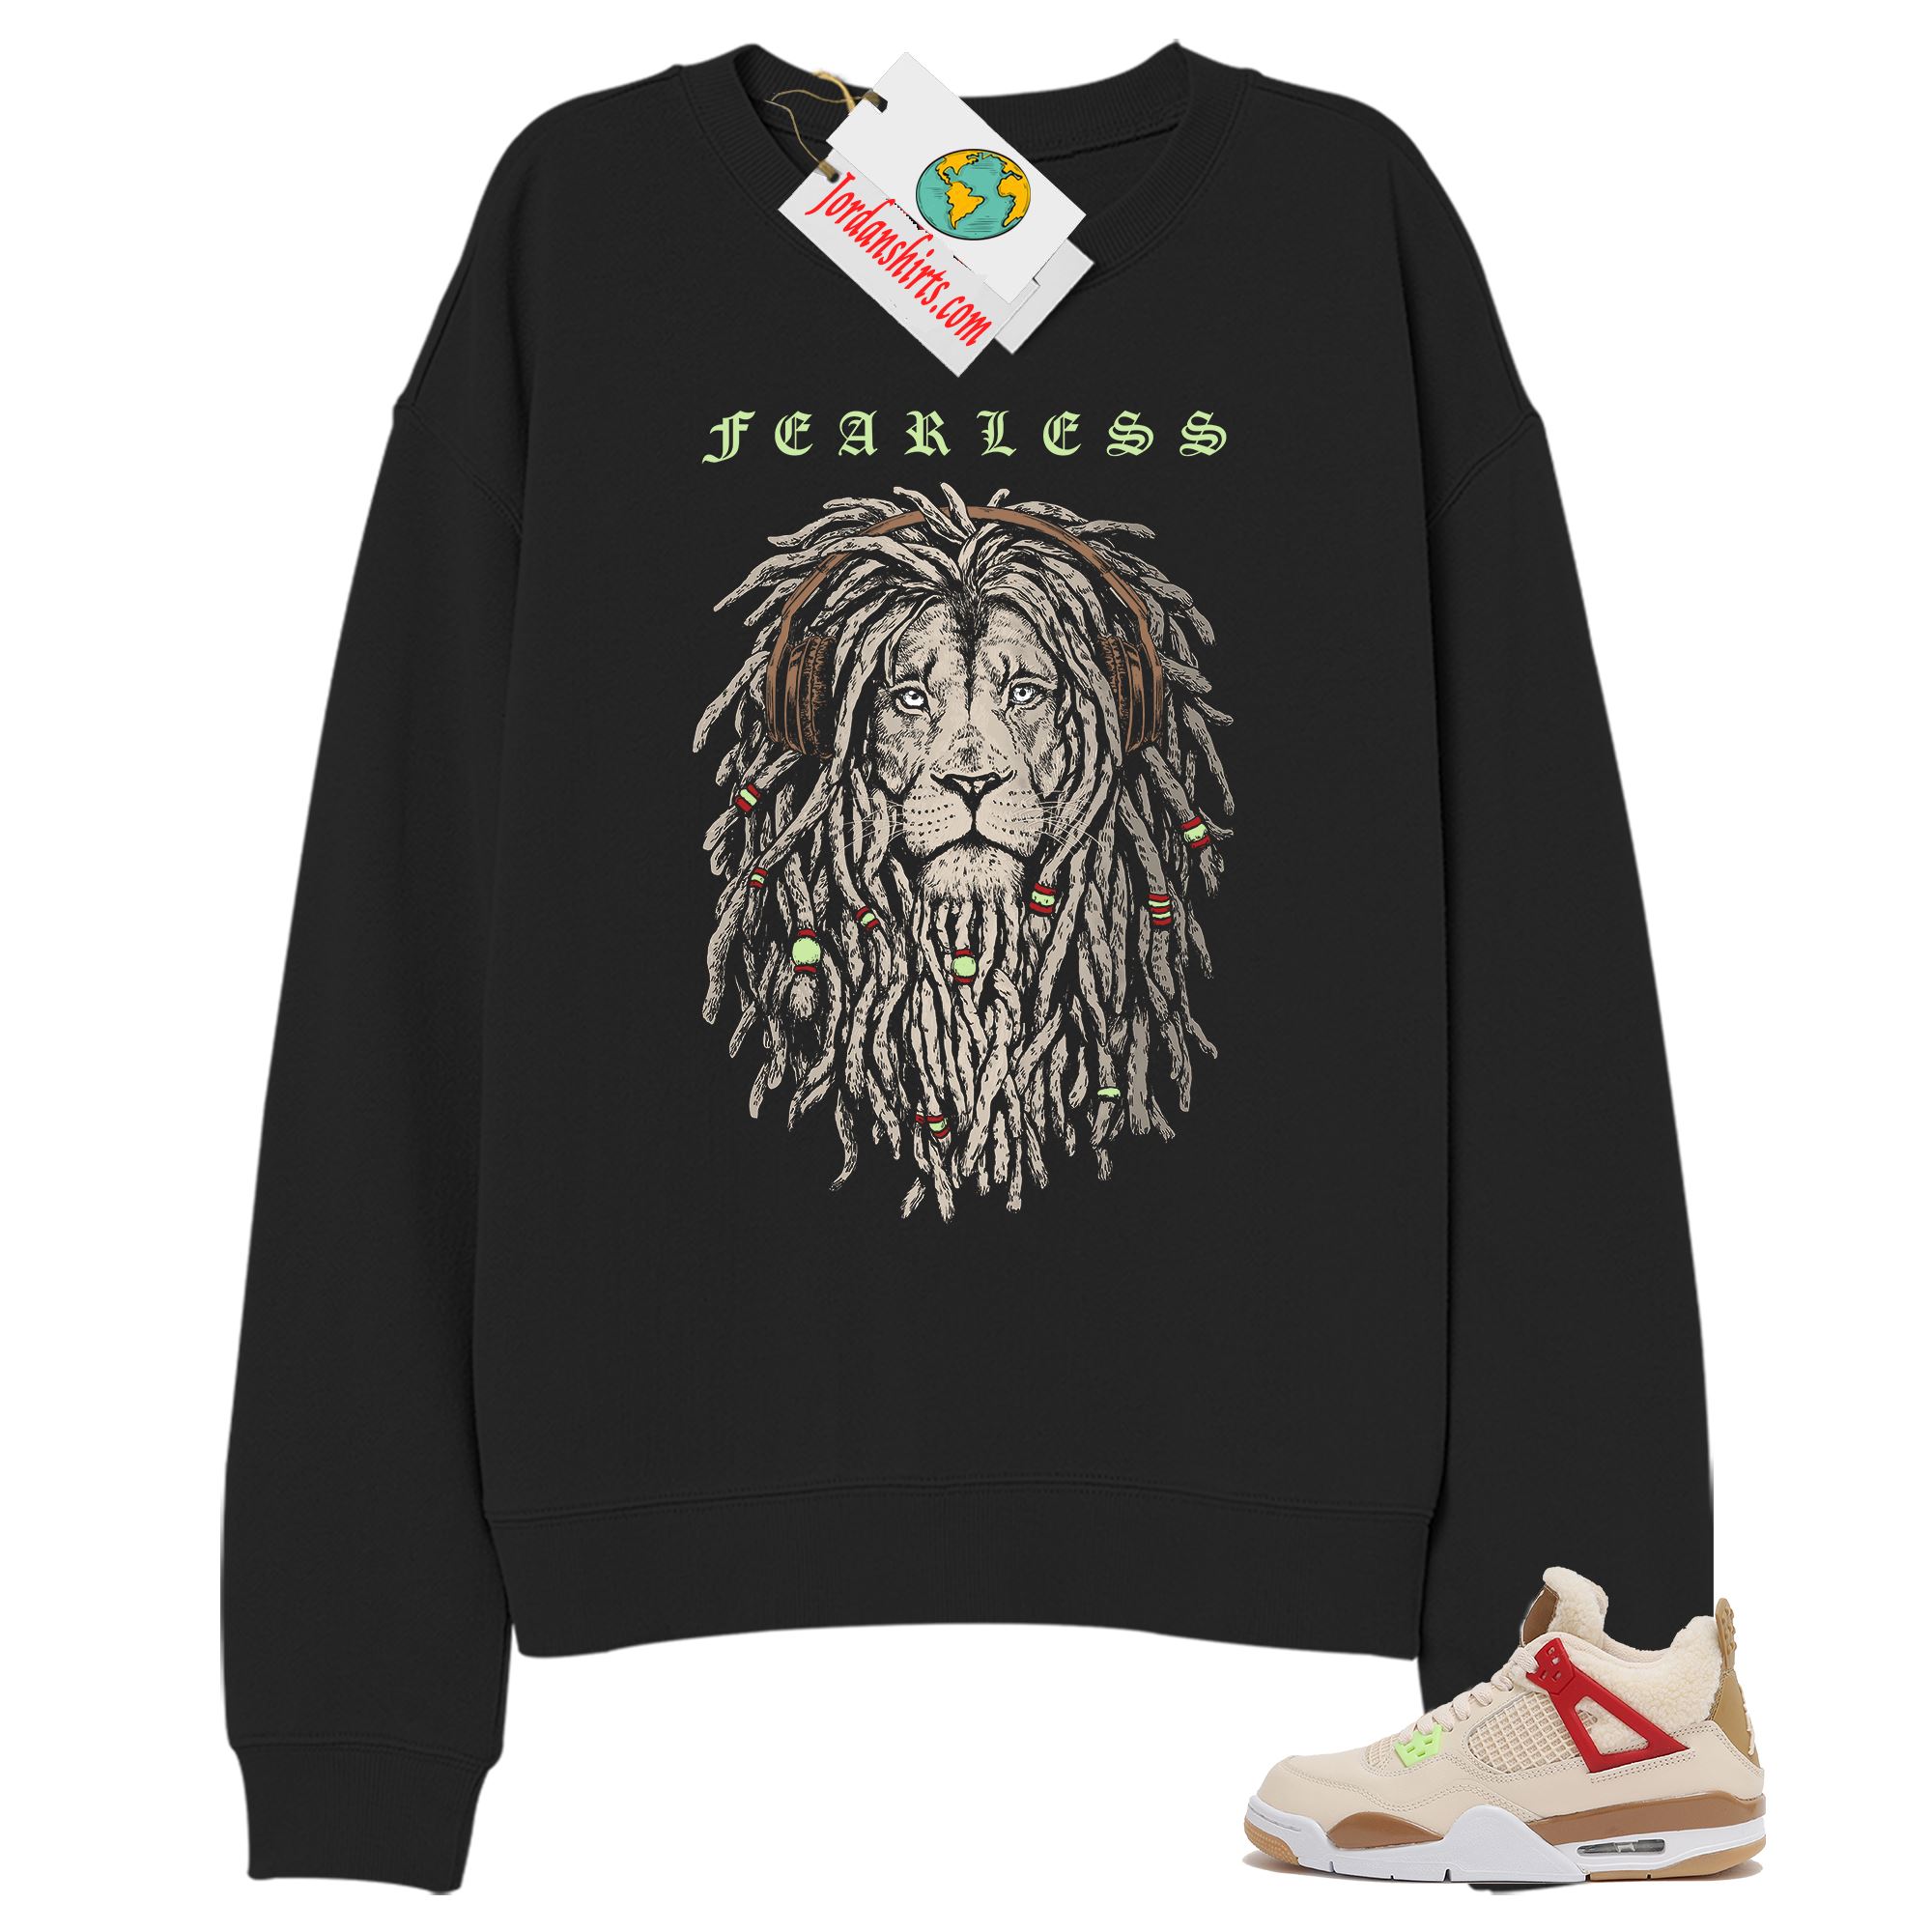 Jordan 4 Sweatshirt, Fearless Lion Black Sweatshirt Air Jordan 4 Wild Things 4s Full Size Up To 5xl